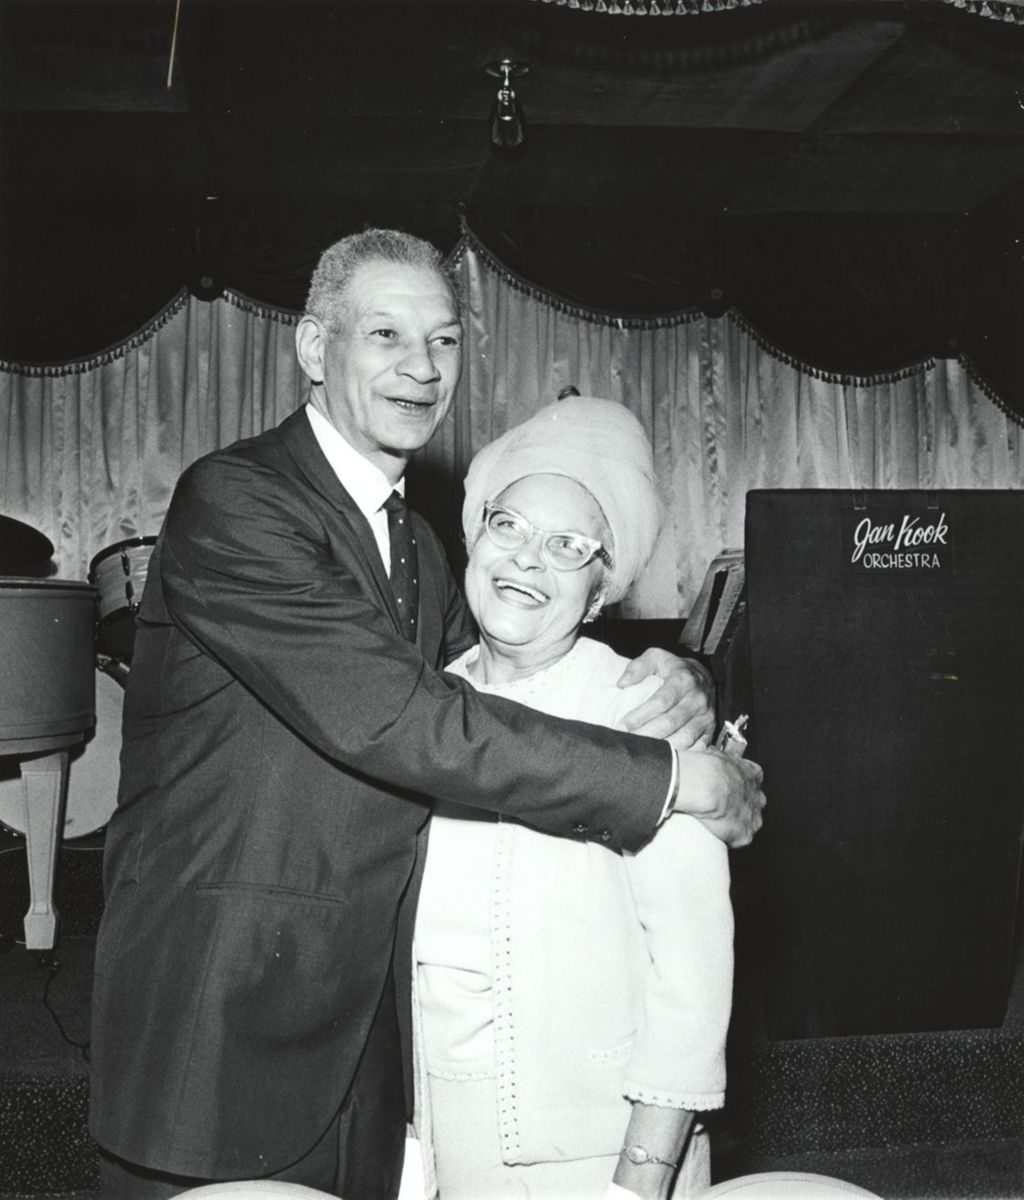 Miniature of Bill Berry with Hattie Mack